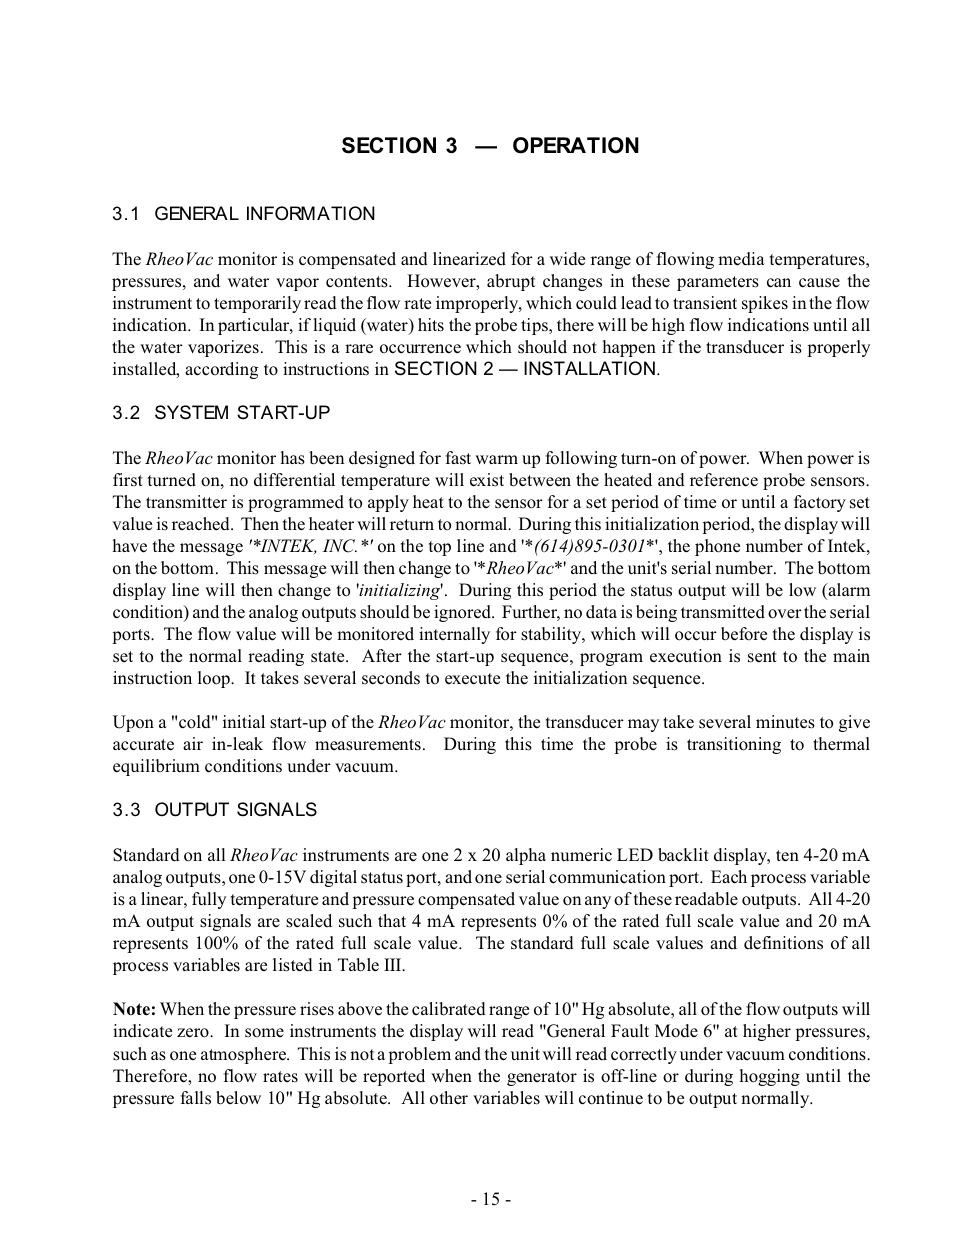 Intek RheoVac 940 User Manual | Page 17 / 28